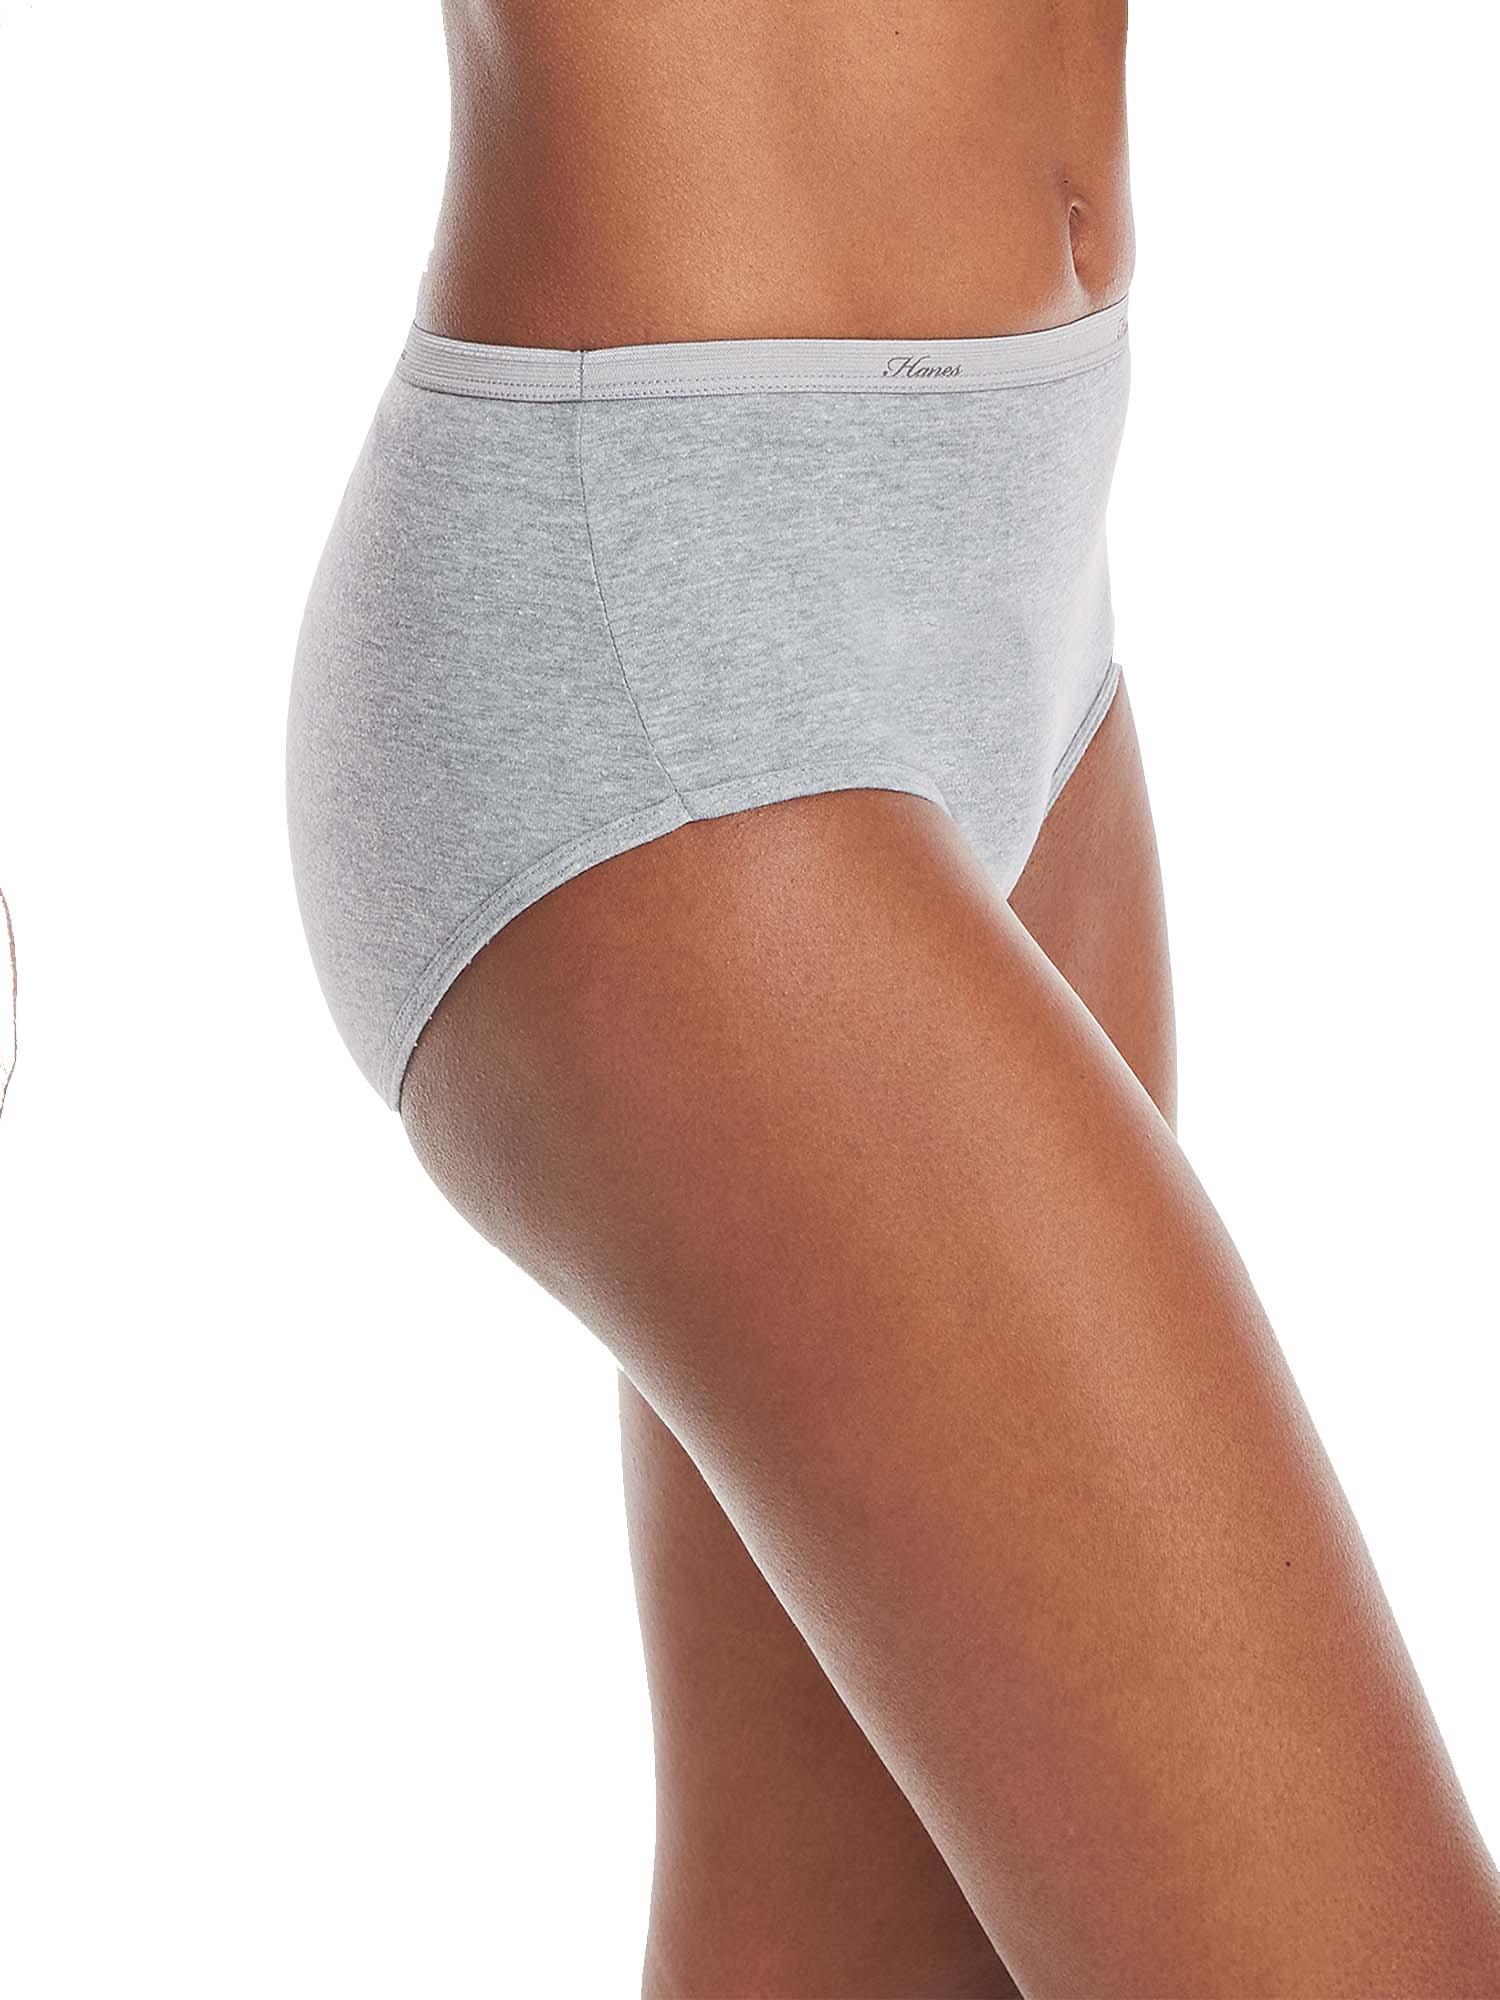 Hanes Women's Cool Comfort Cotton Brief Underwear, 6-Pack - image 5 of 8